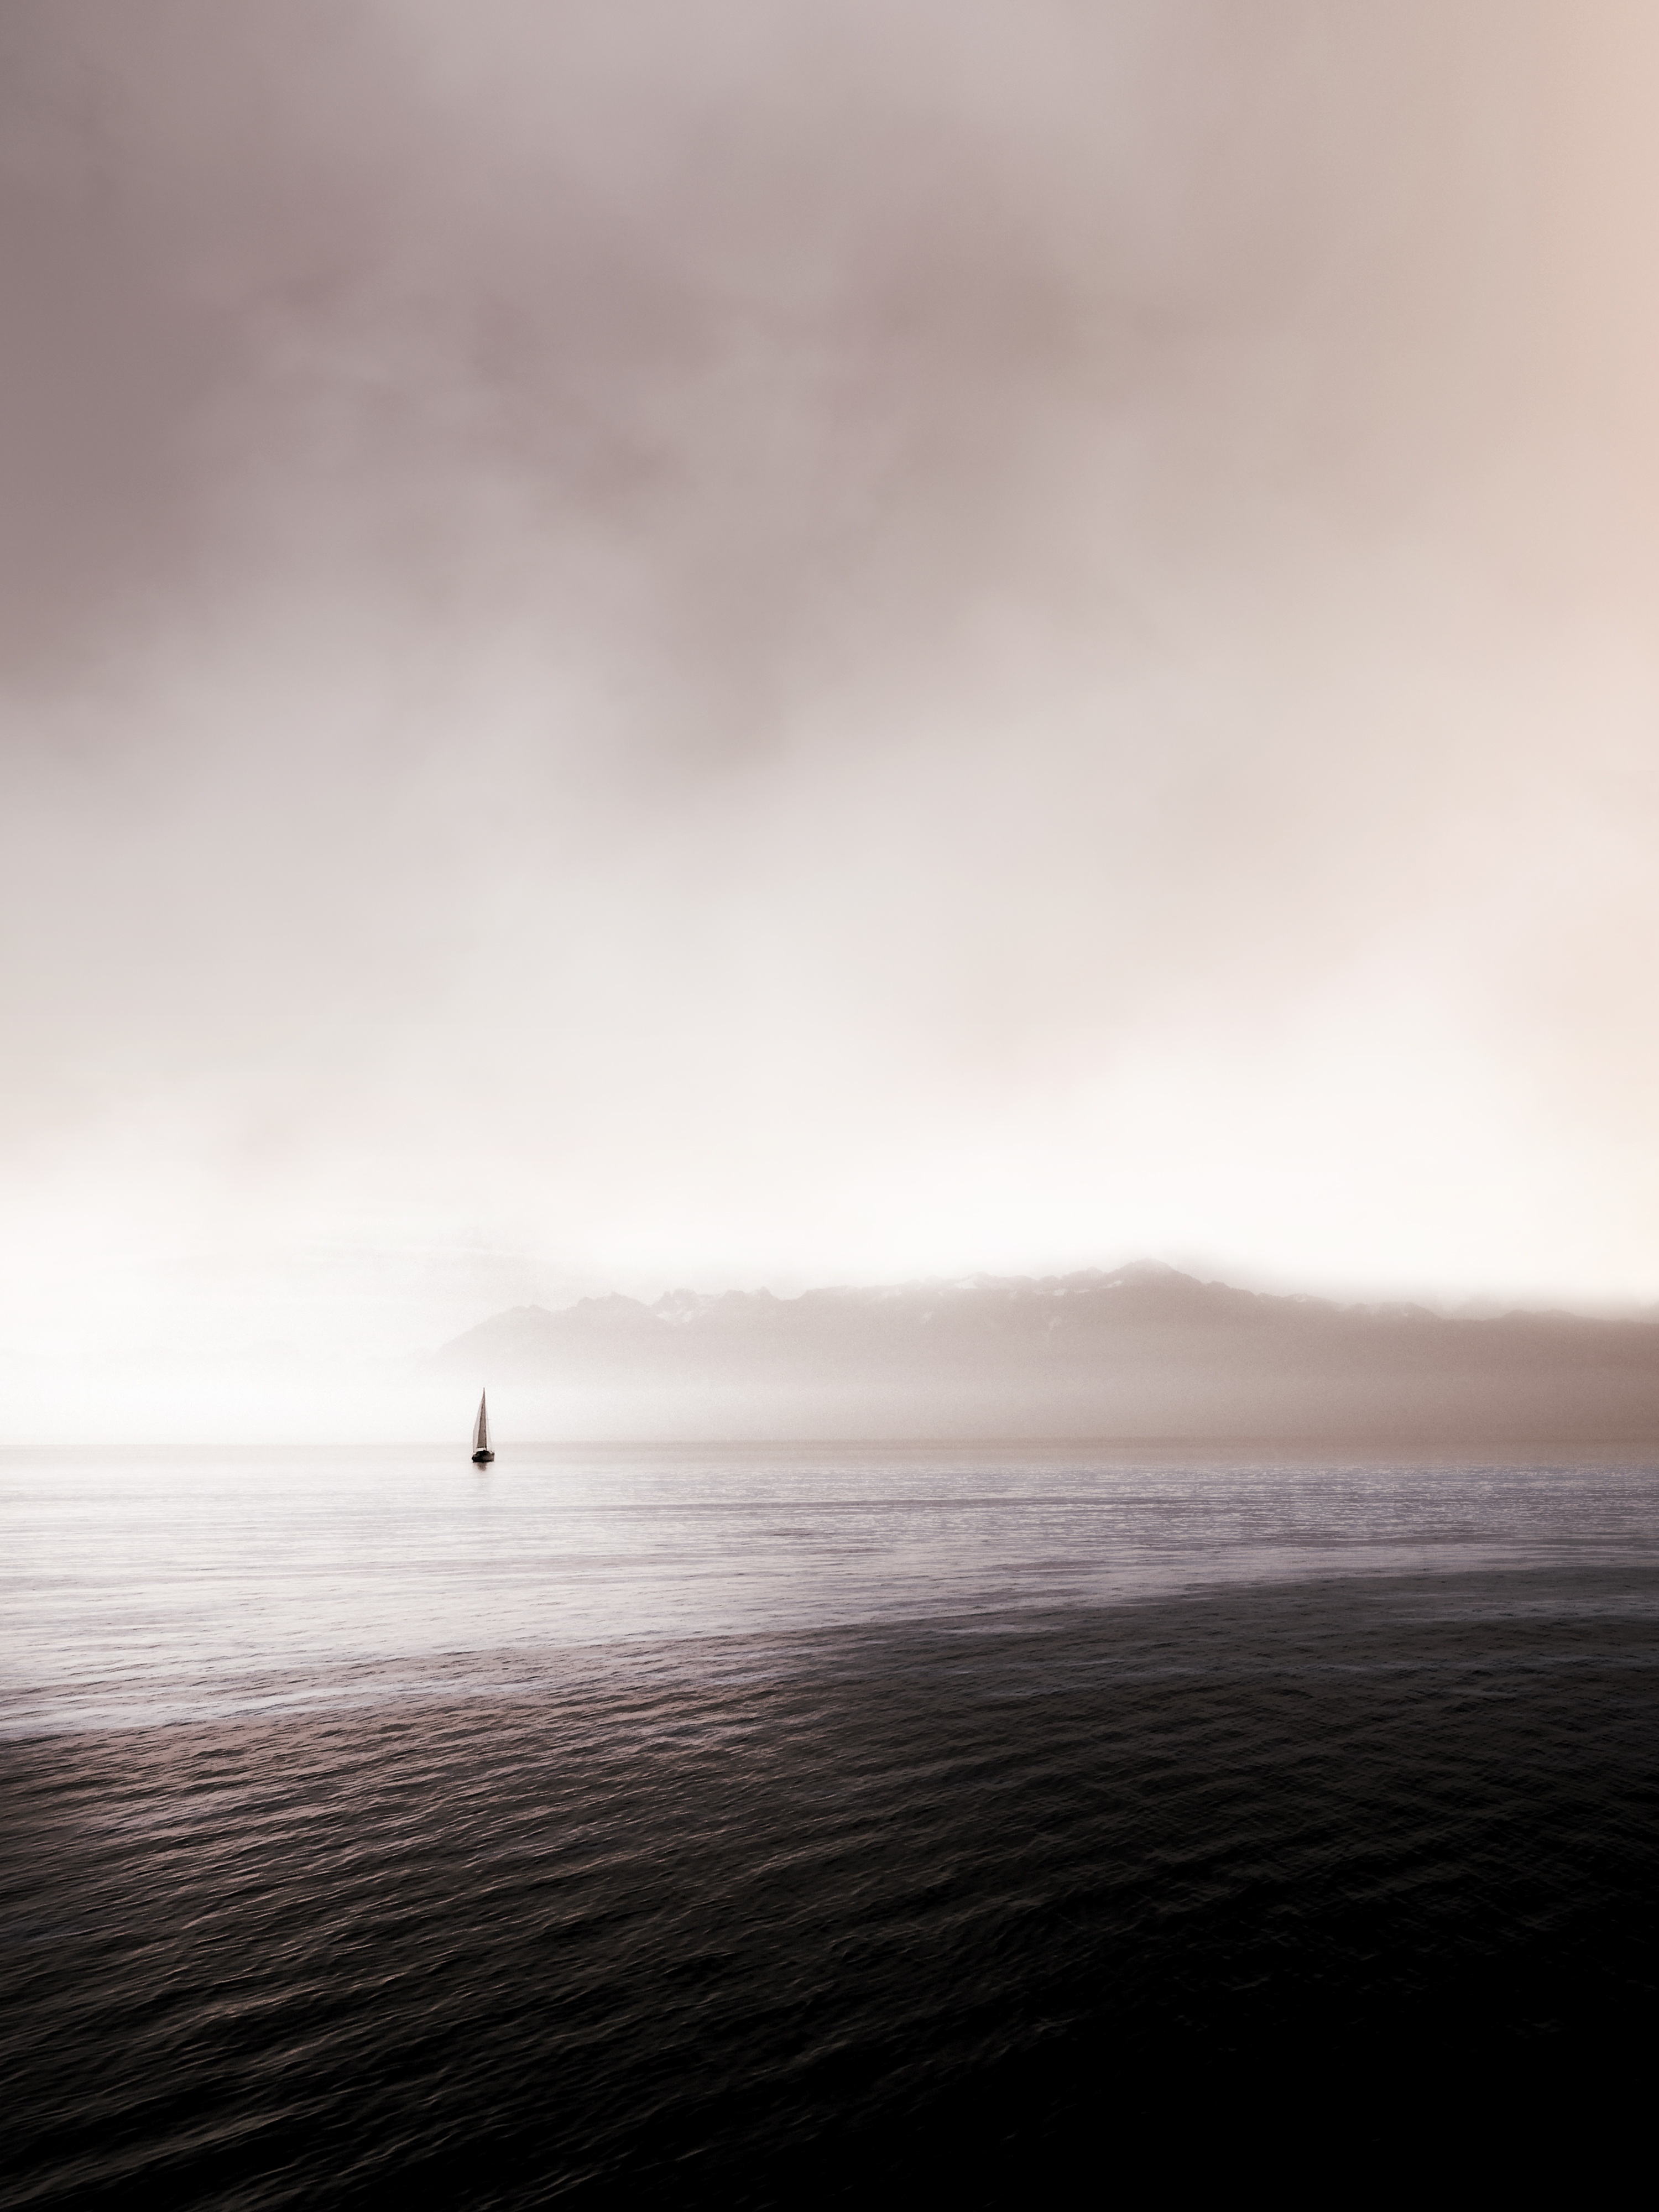 sailfish, nature, sea, waves, fog, dahl, distance, sailboat